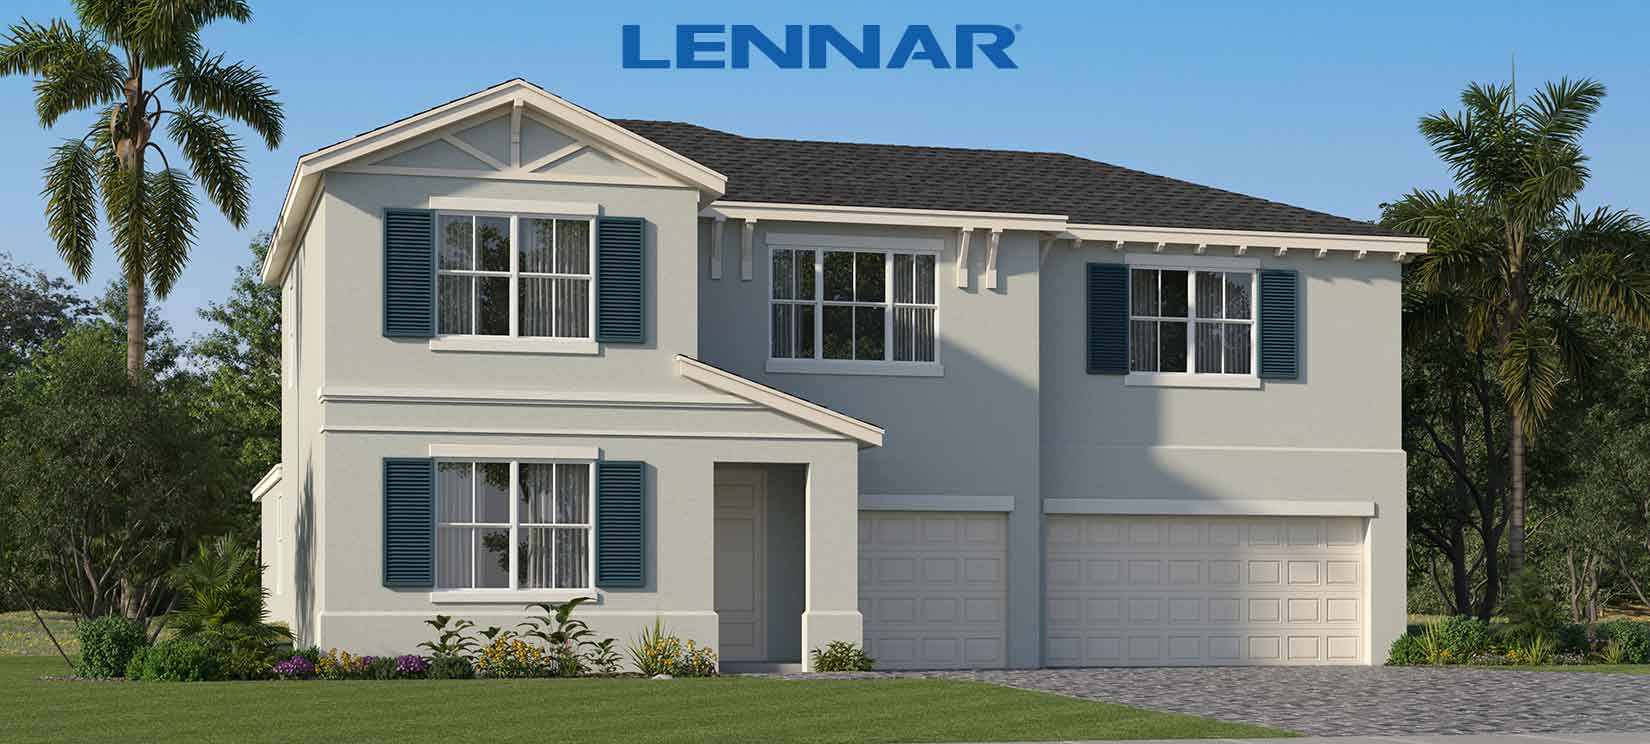 Lennar Homes & FLoorplans at Central Park St. Lucie FL